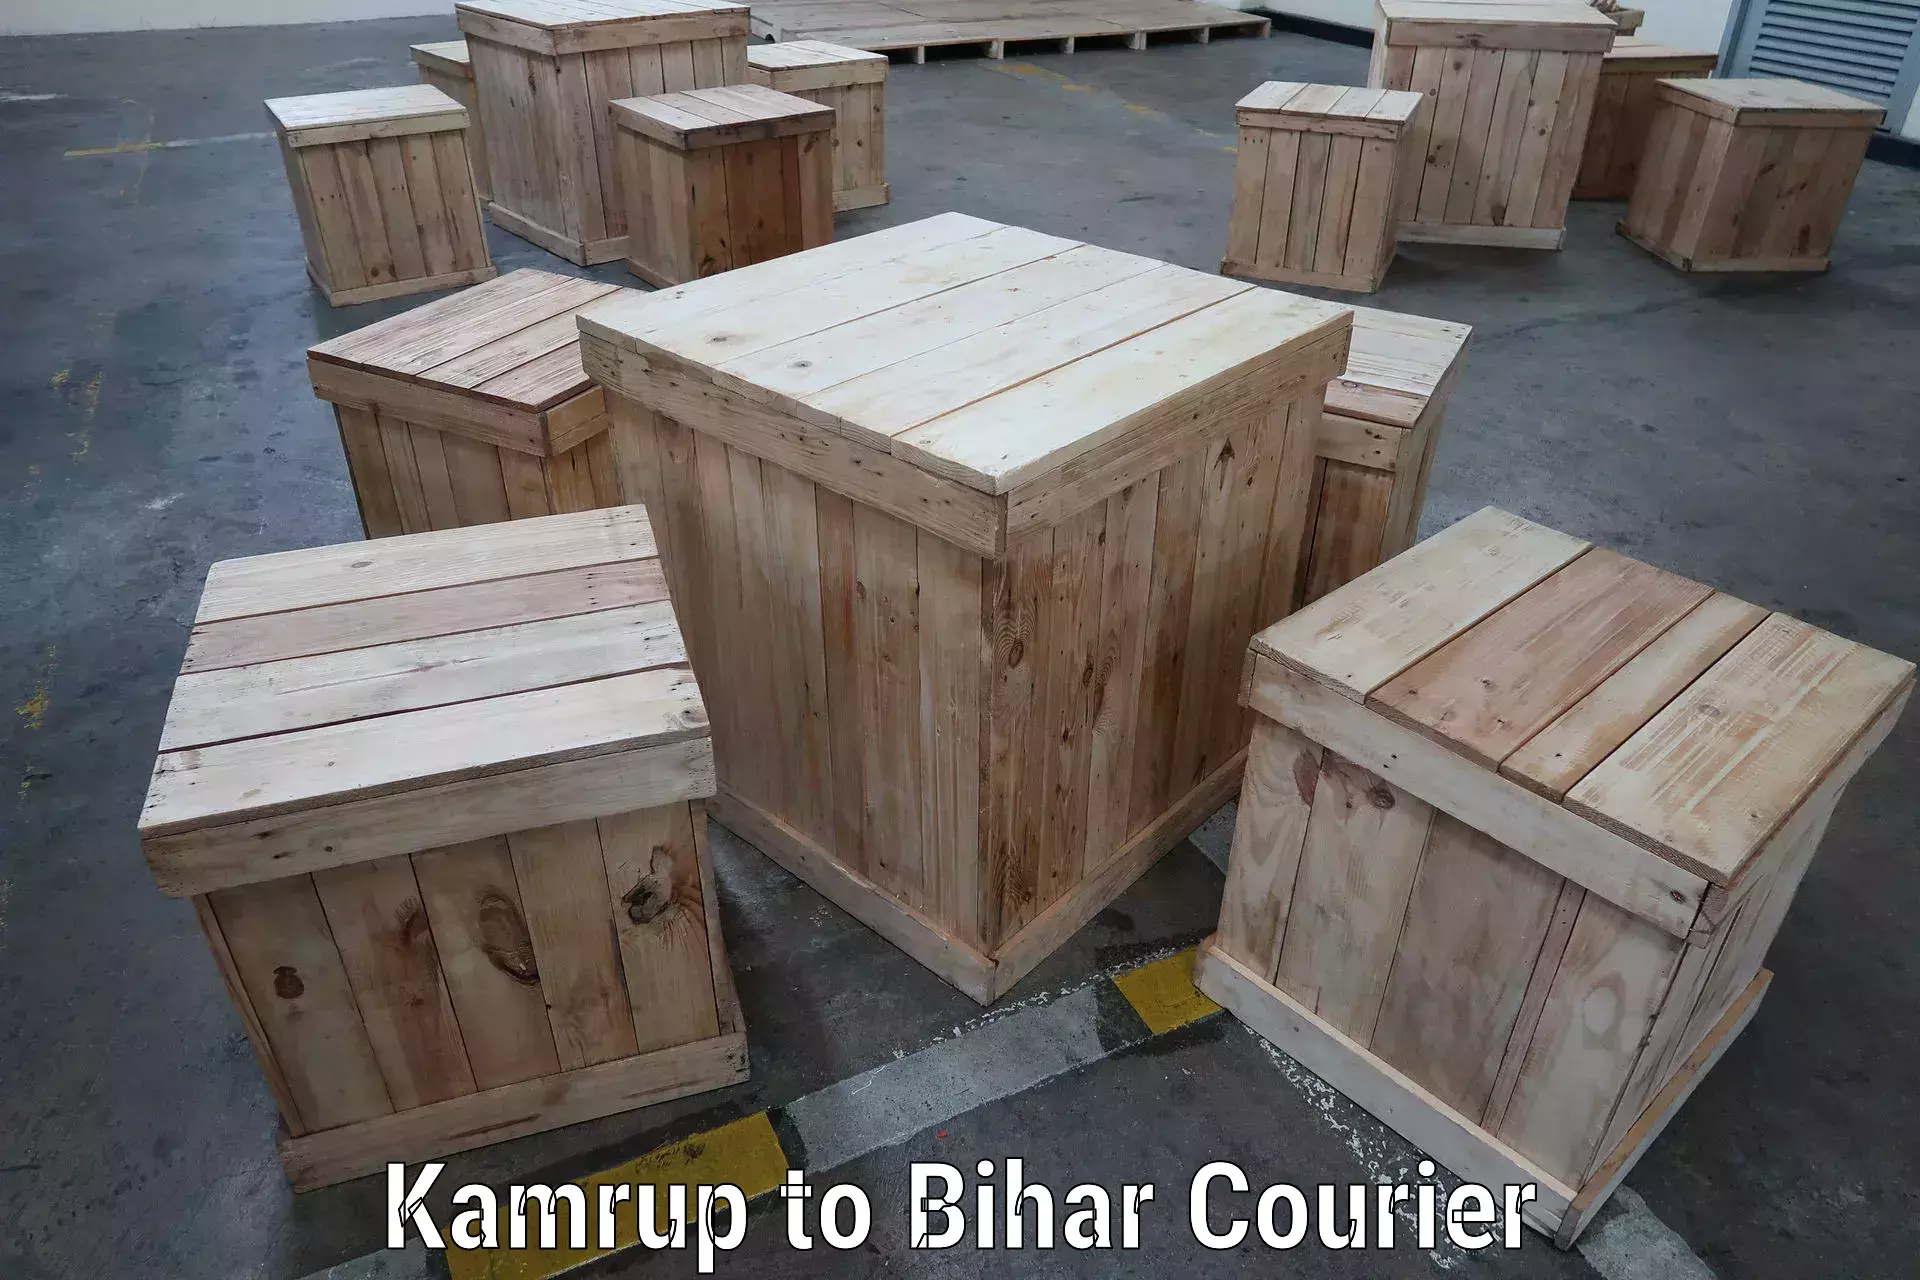 Global logistics network Kamrup to Bihar